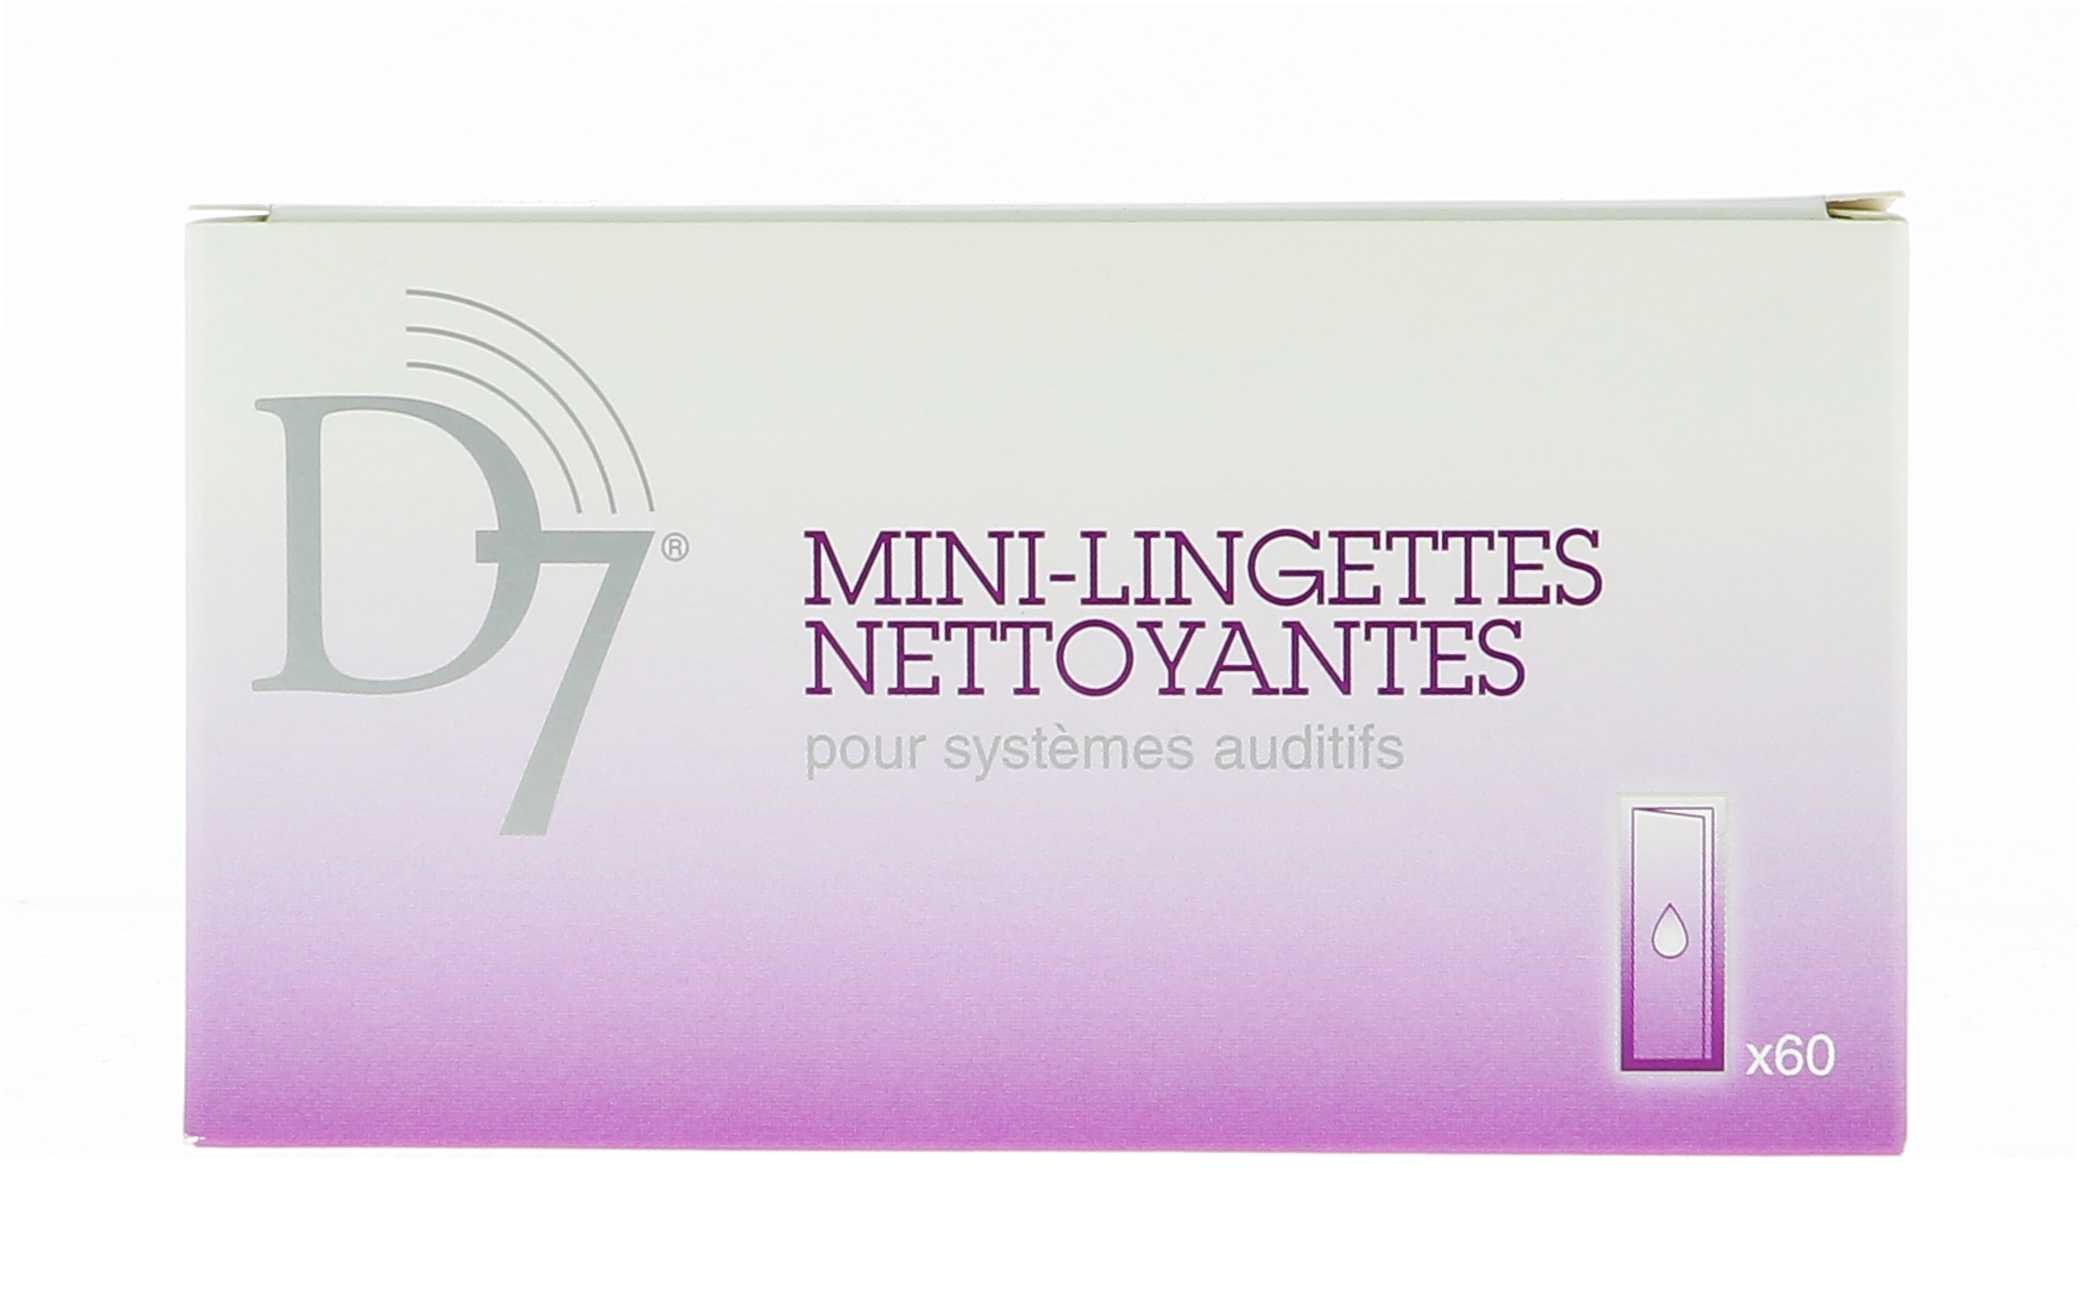  60 Mini Lingettes nettoyantes D7